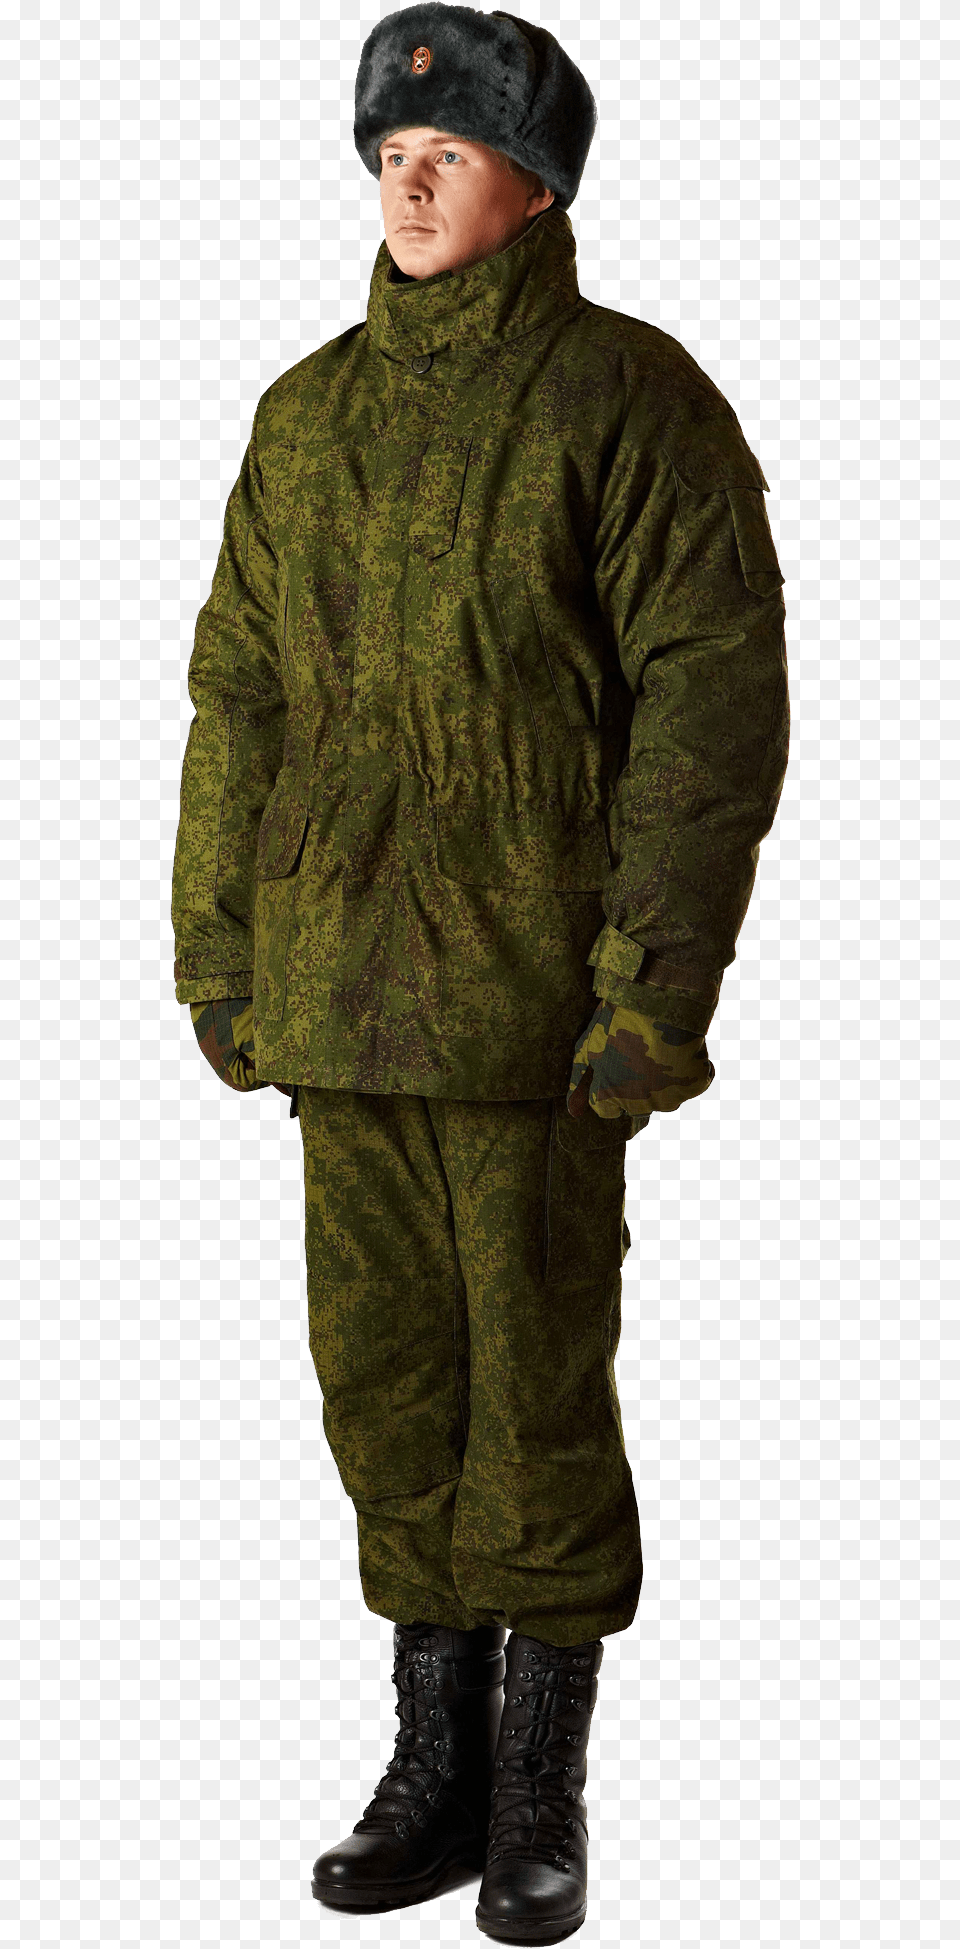 Soldier, Clothing, Coat, Jacket, Adult Png Image